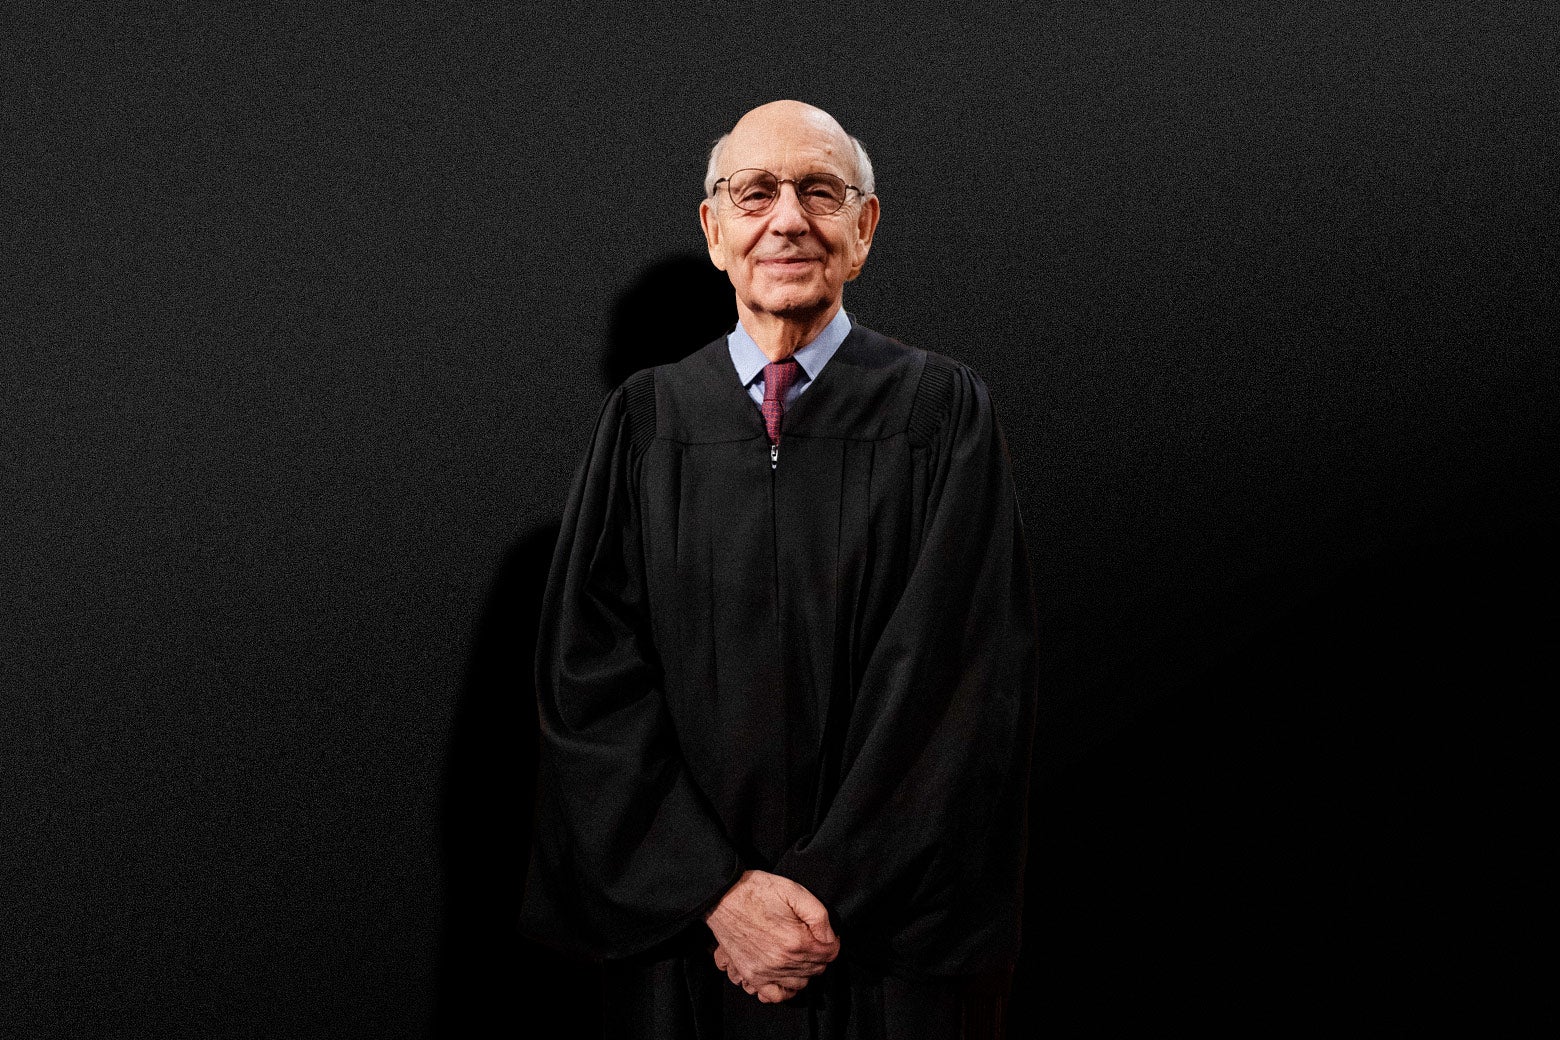 Stephen Breyer standing while wearing Supreme Court robes